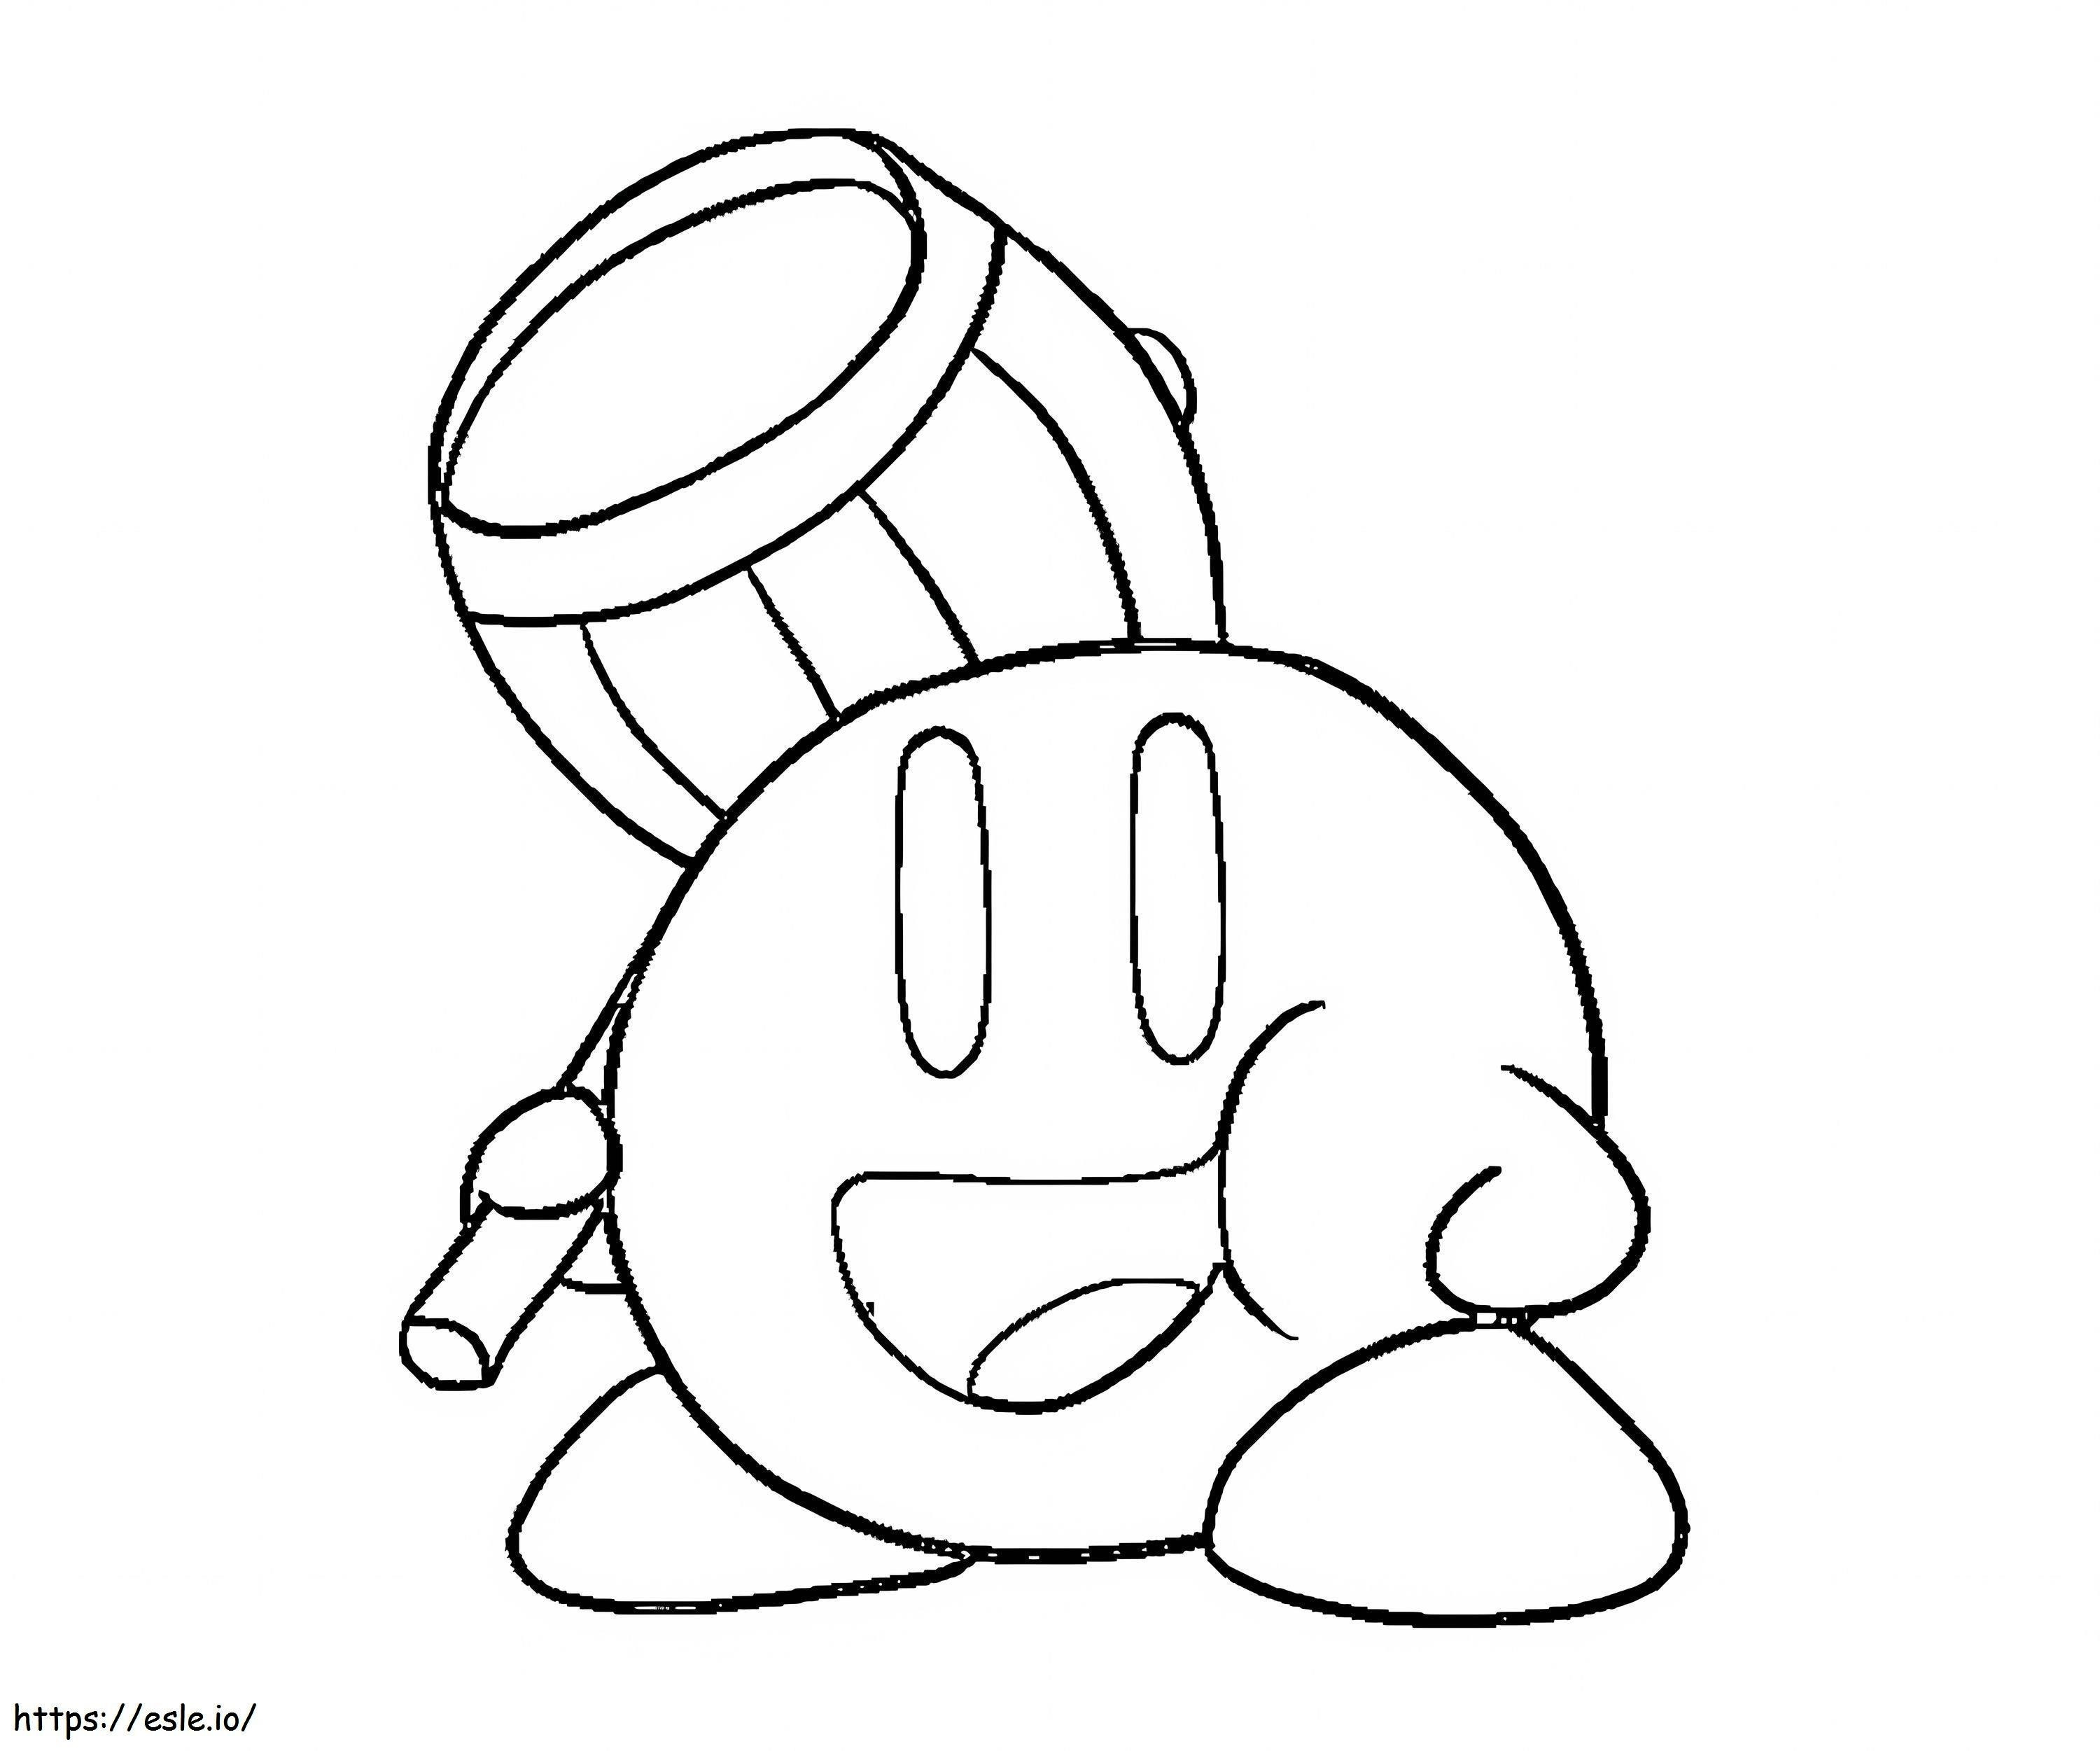 Dibuja a Kirby sosteniendo un martillo para colorear